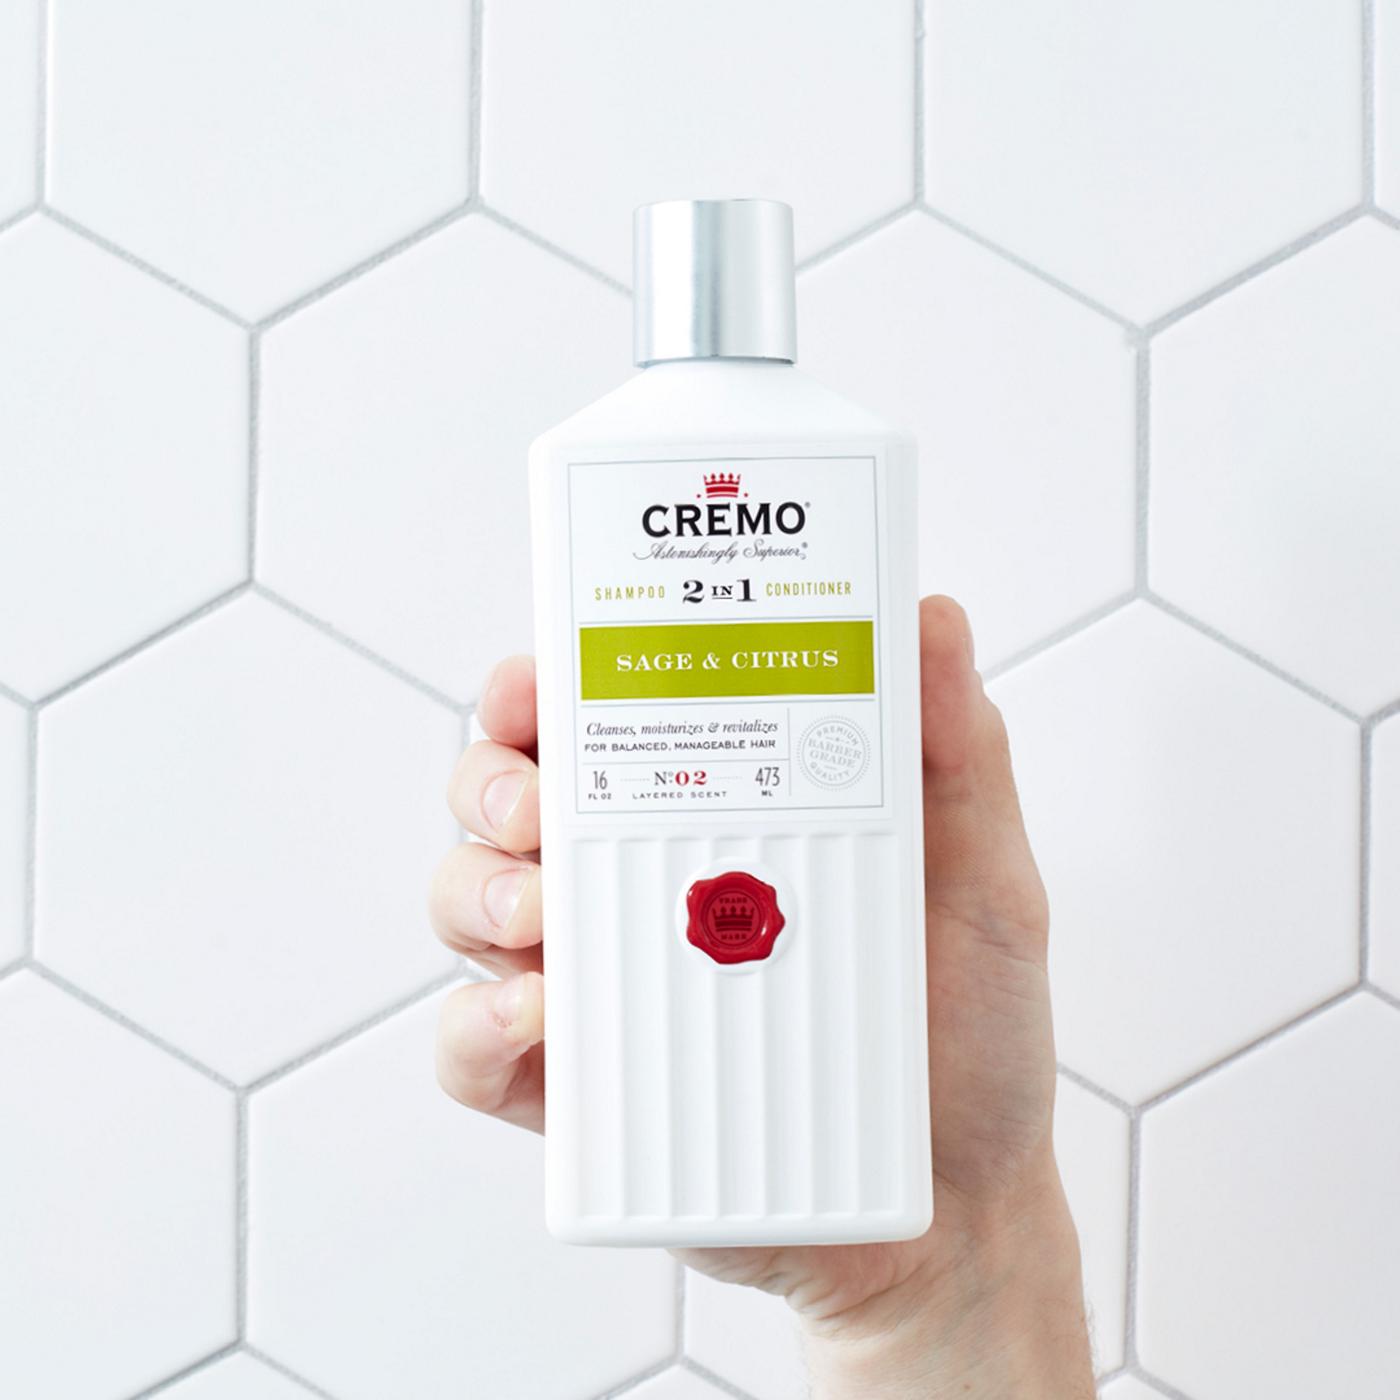 Cremo 2 in 1 Shampoo Conditioner - Sage & Citrus; image 3 of 6